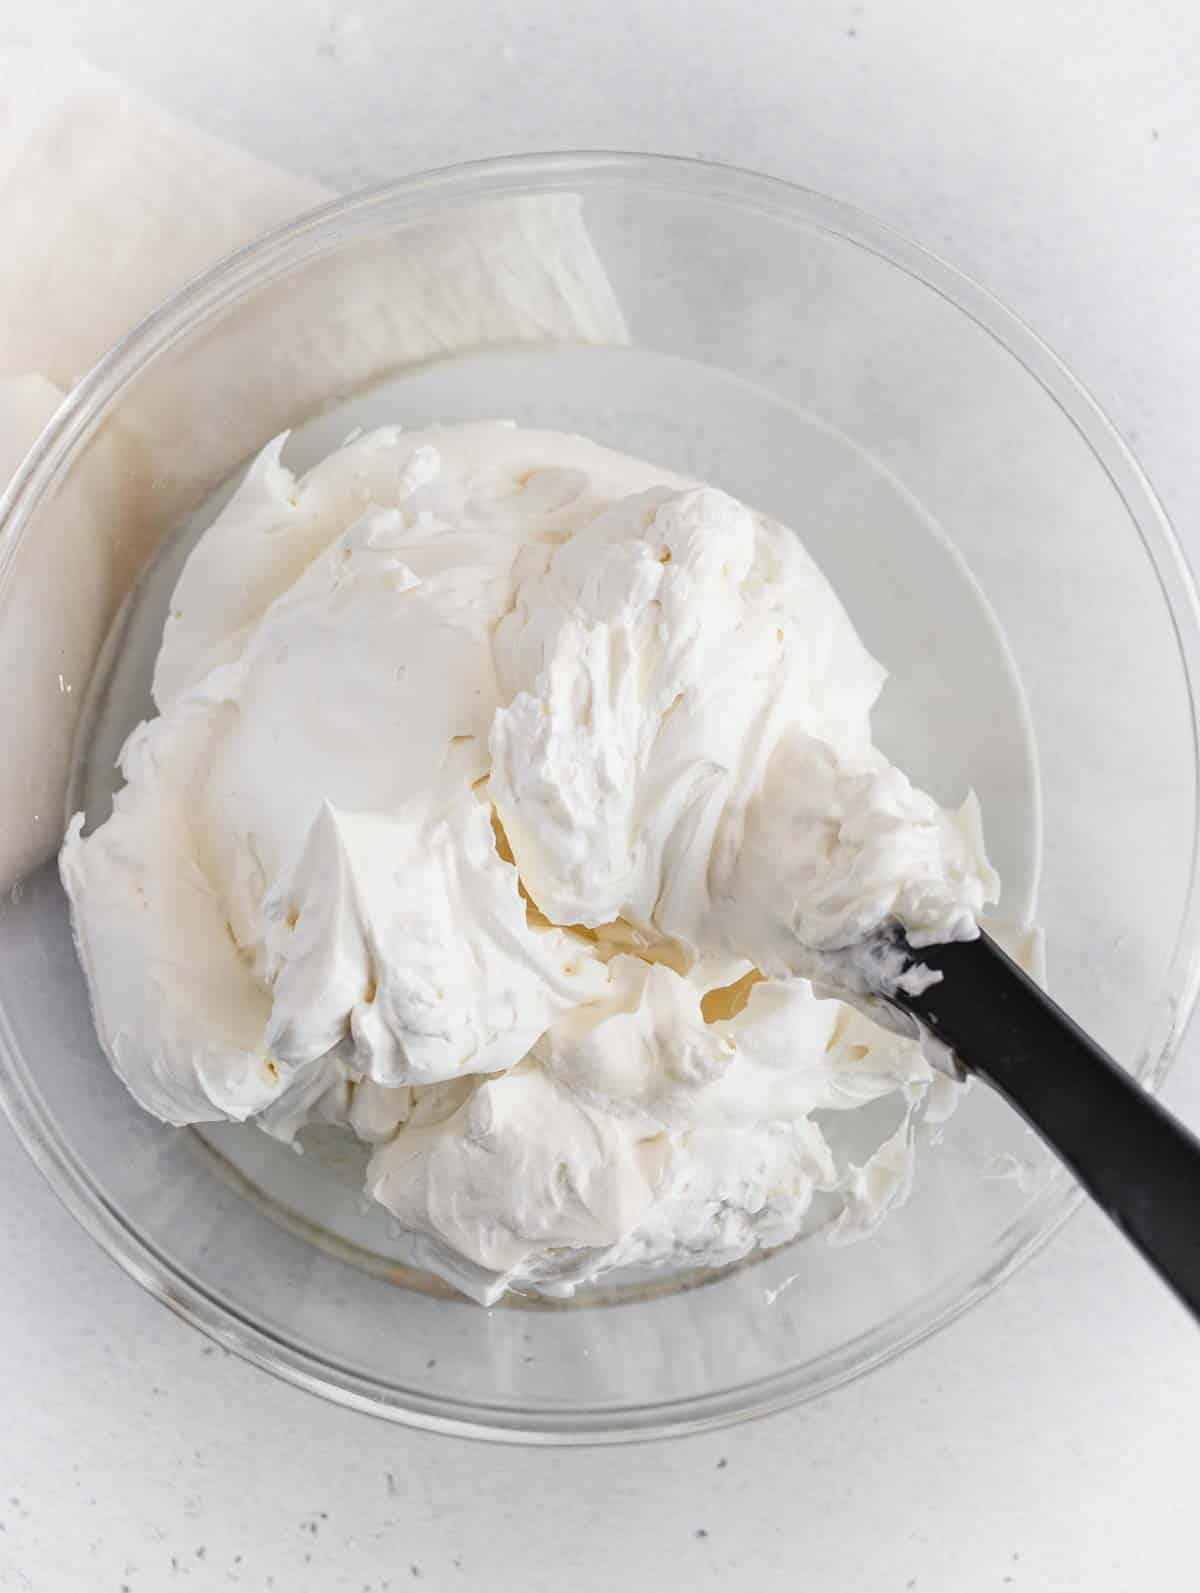 whipped cream and yogurt mixed together